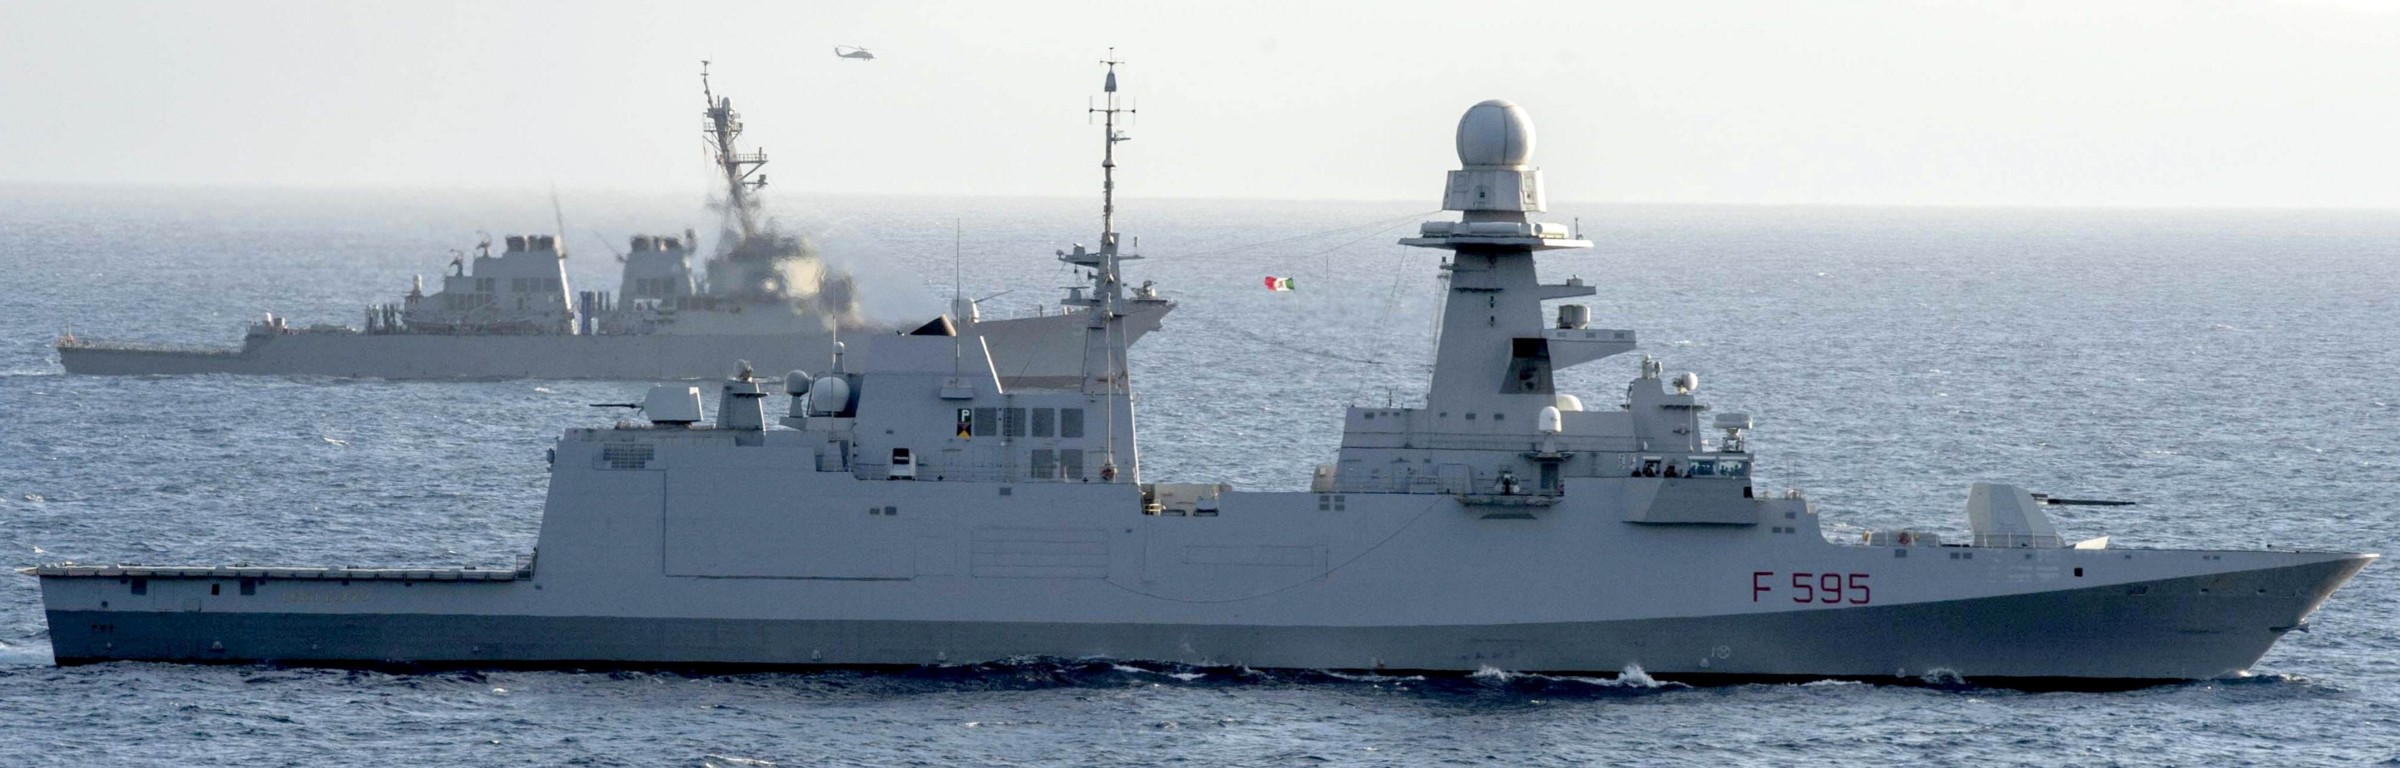 f-595 luigi rizzo its nave bergamini fremm class guided missile frigate italian navy marina militare 44